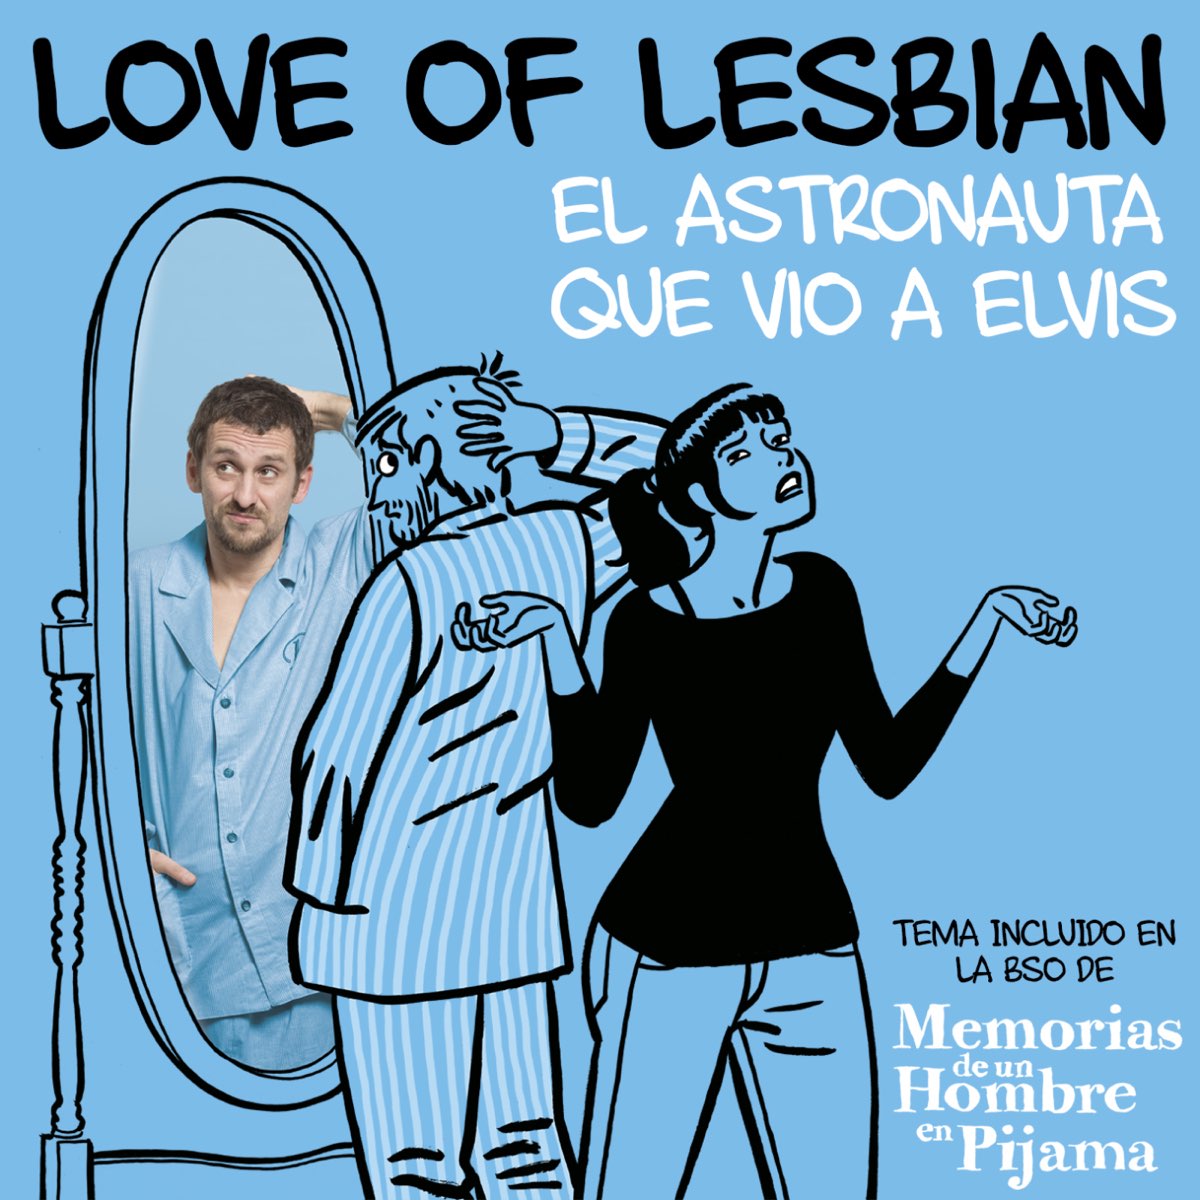 Love of lesbian letra uuuuu historia de memoria